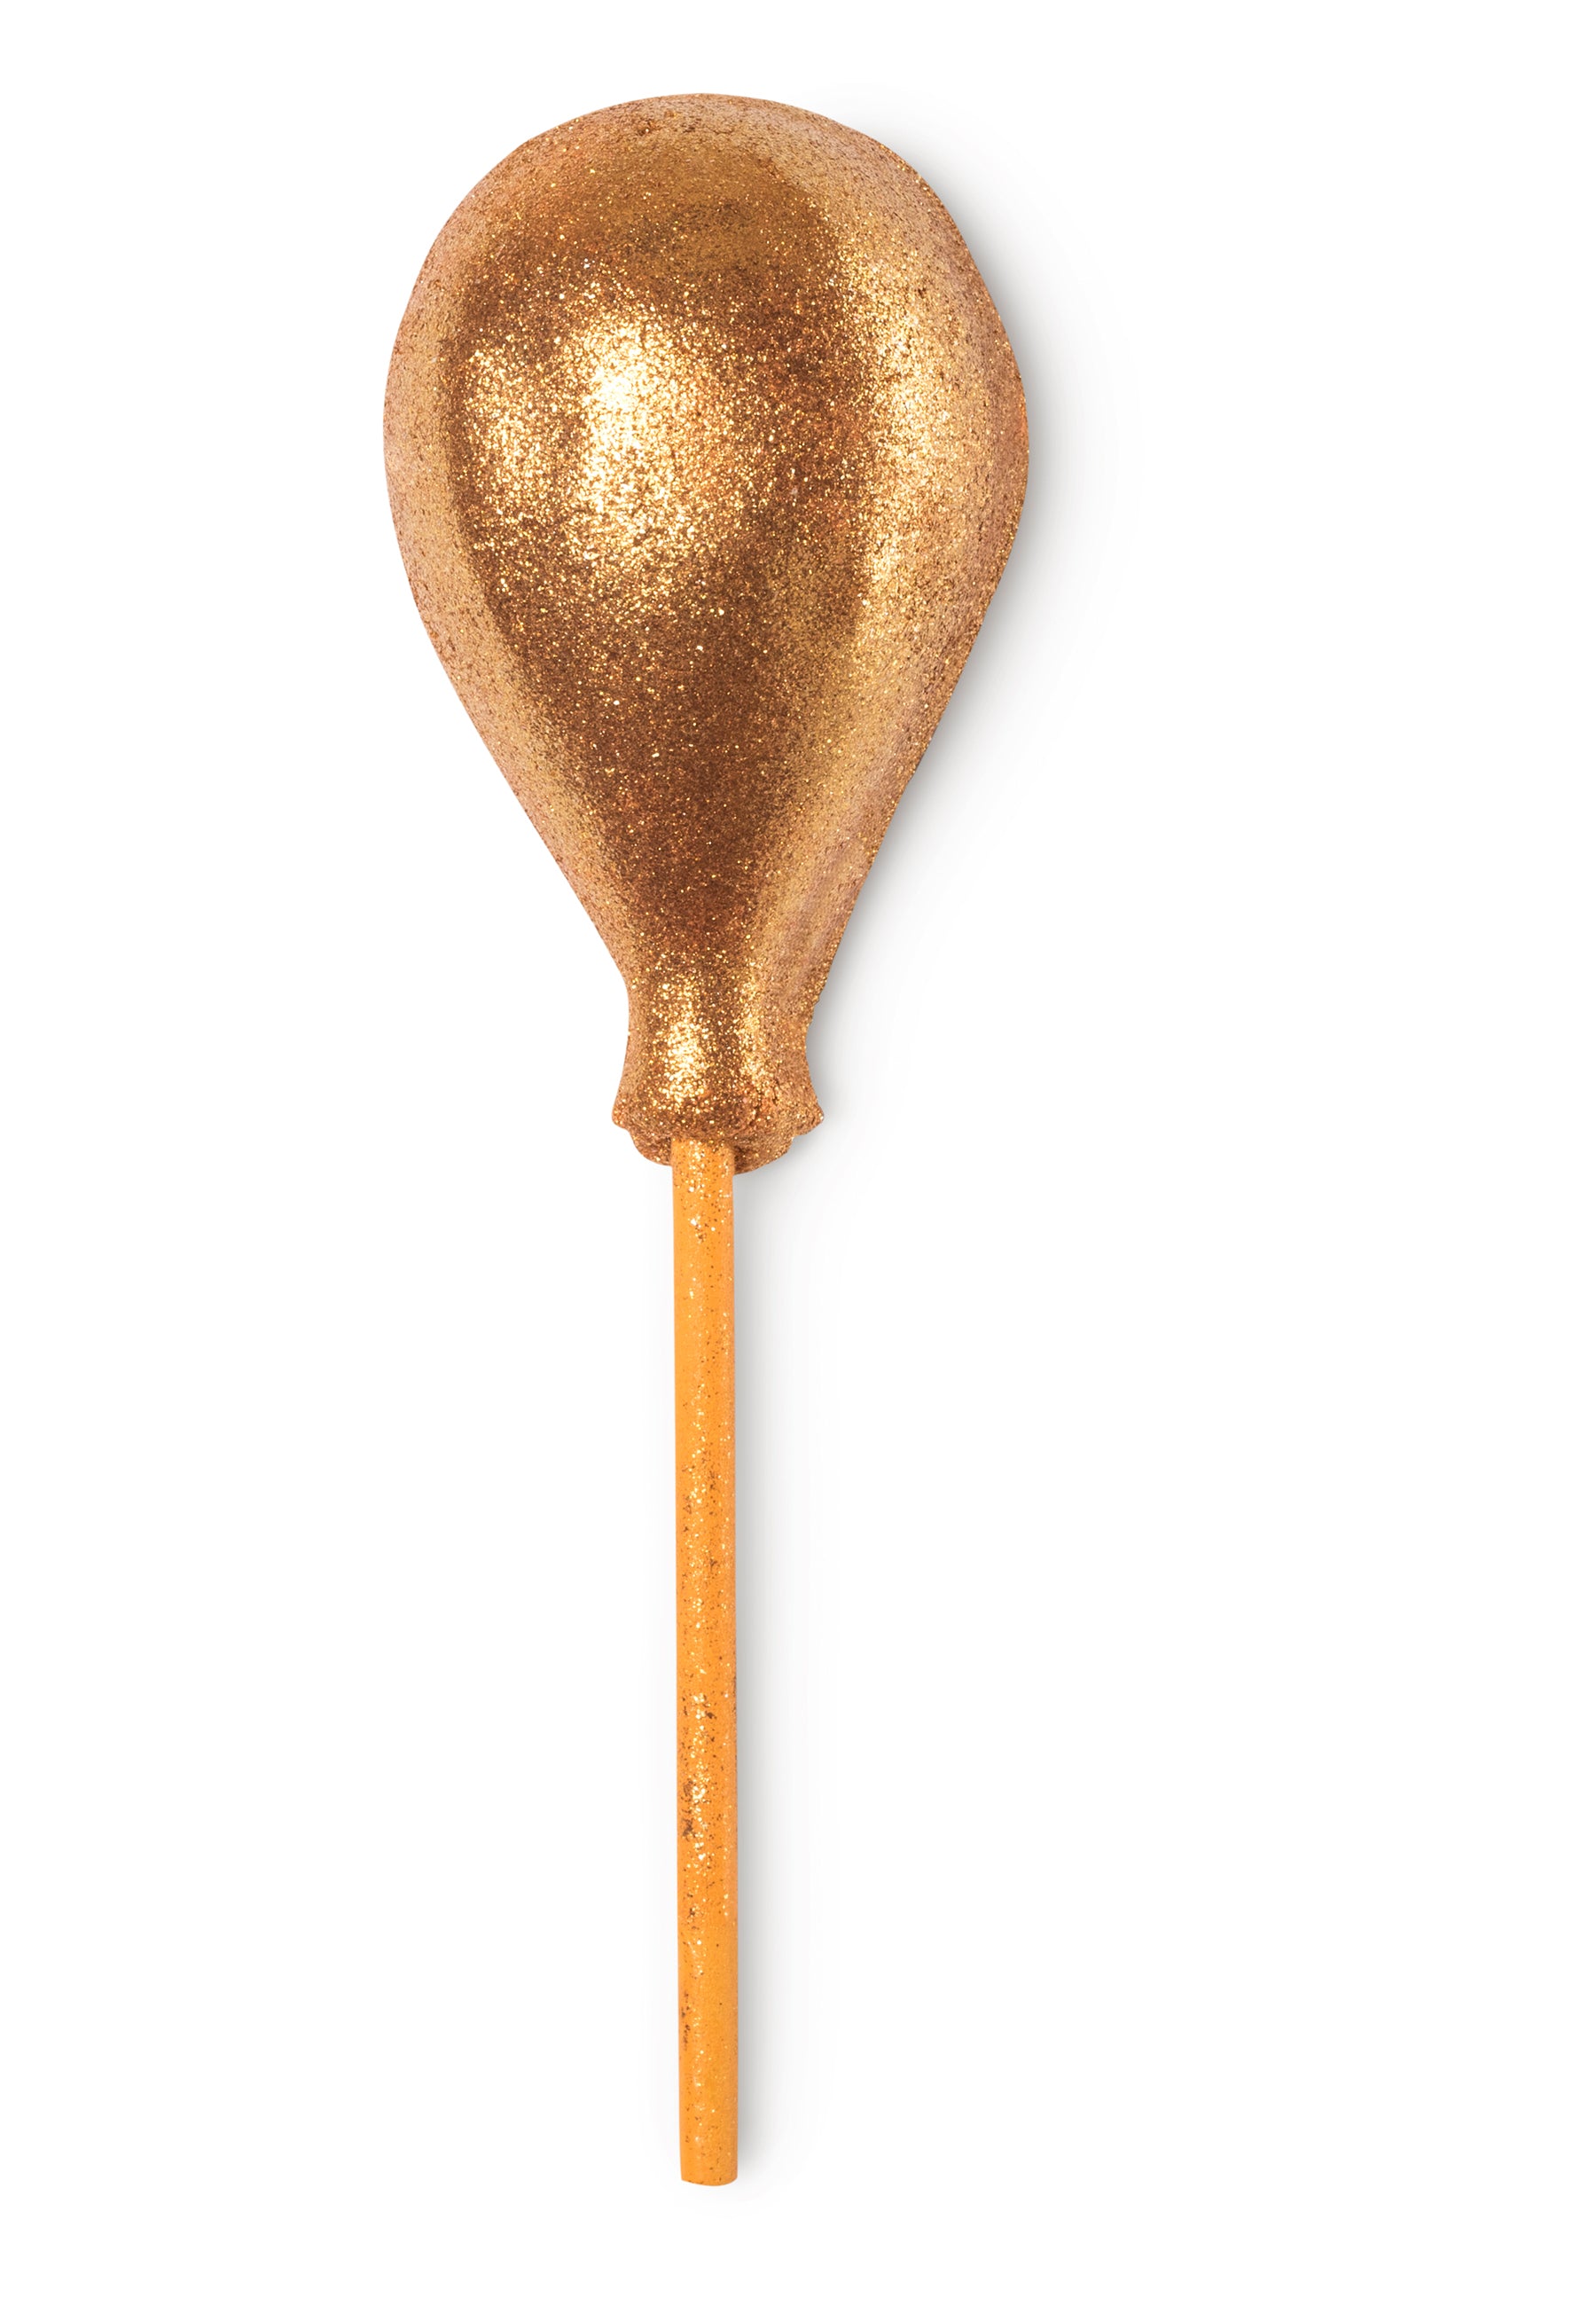 A gold balloon bubble bar on a stick